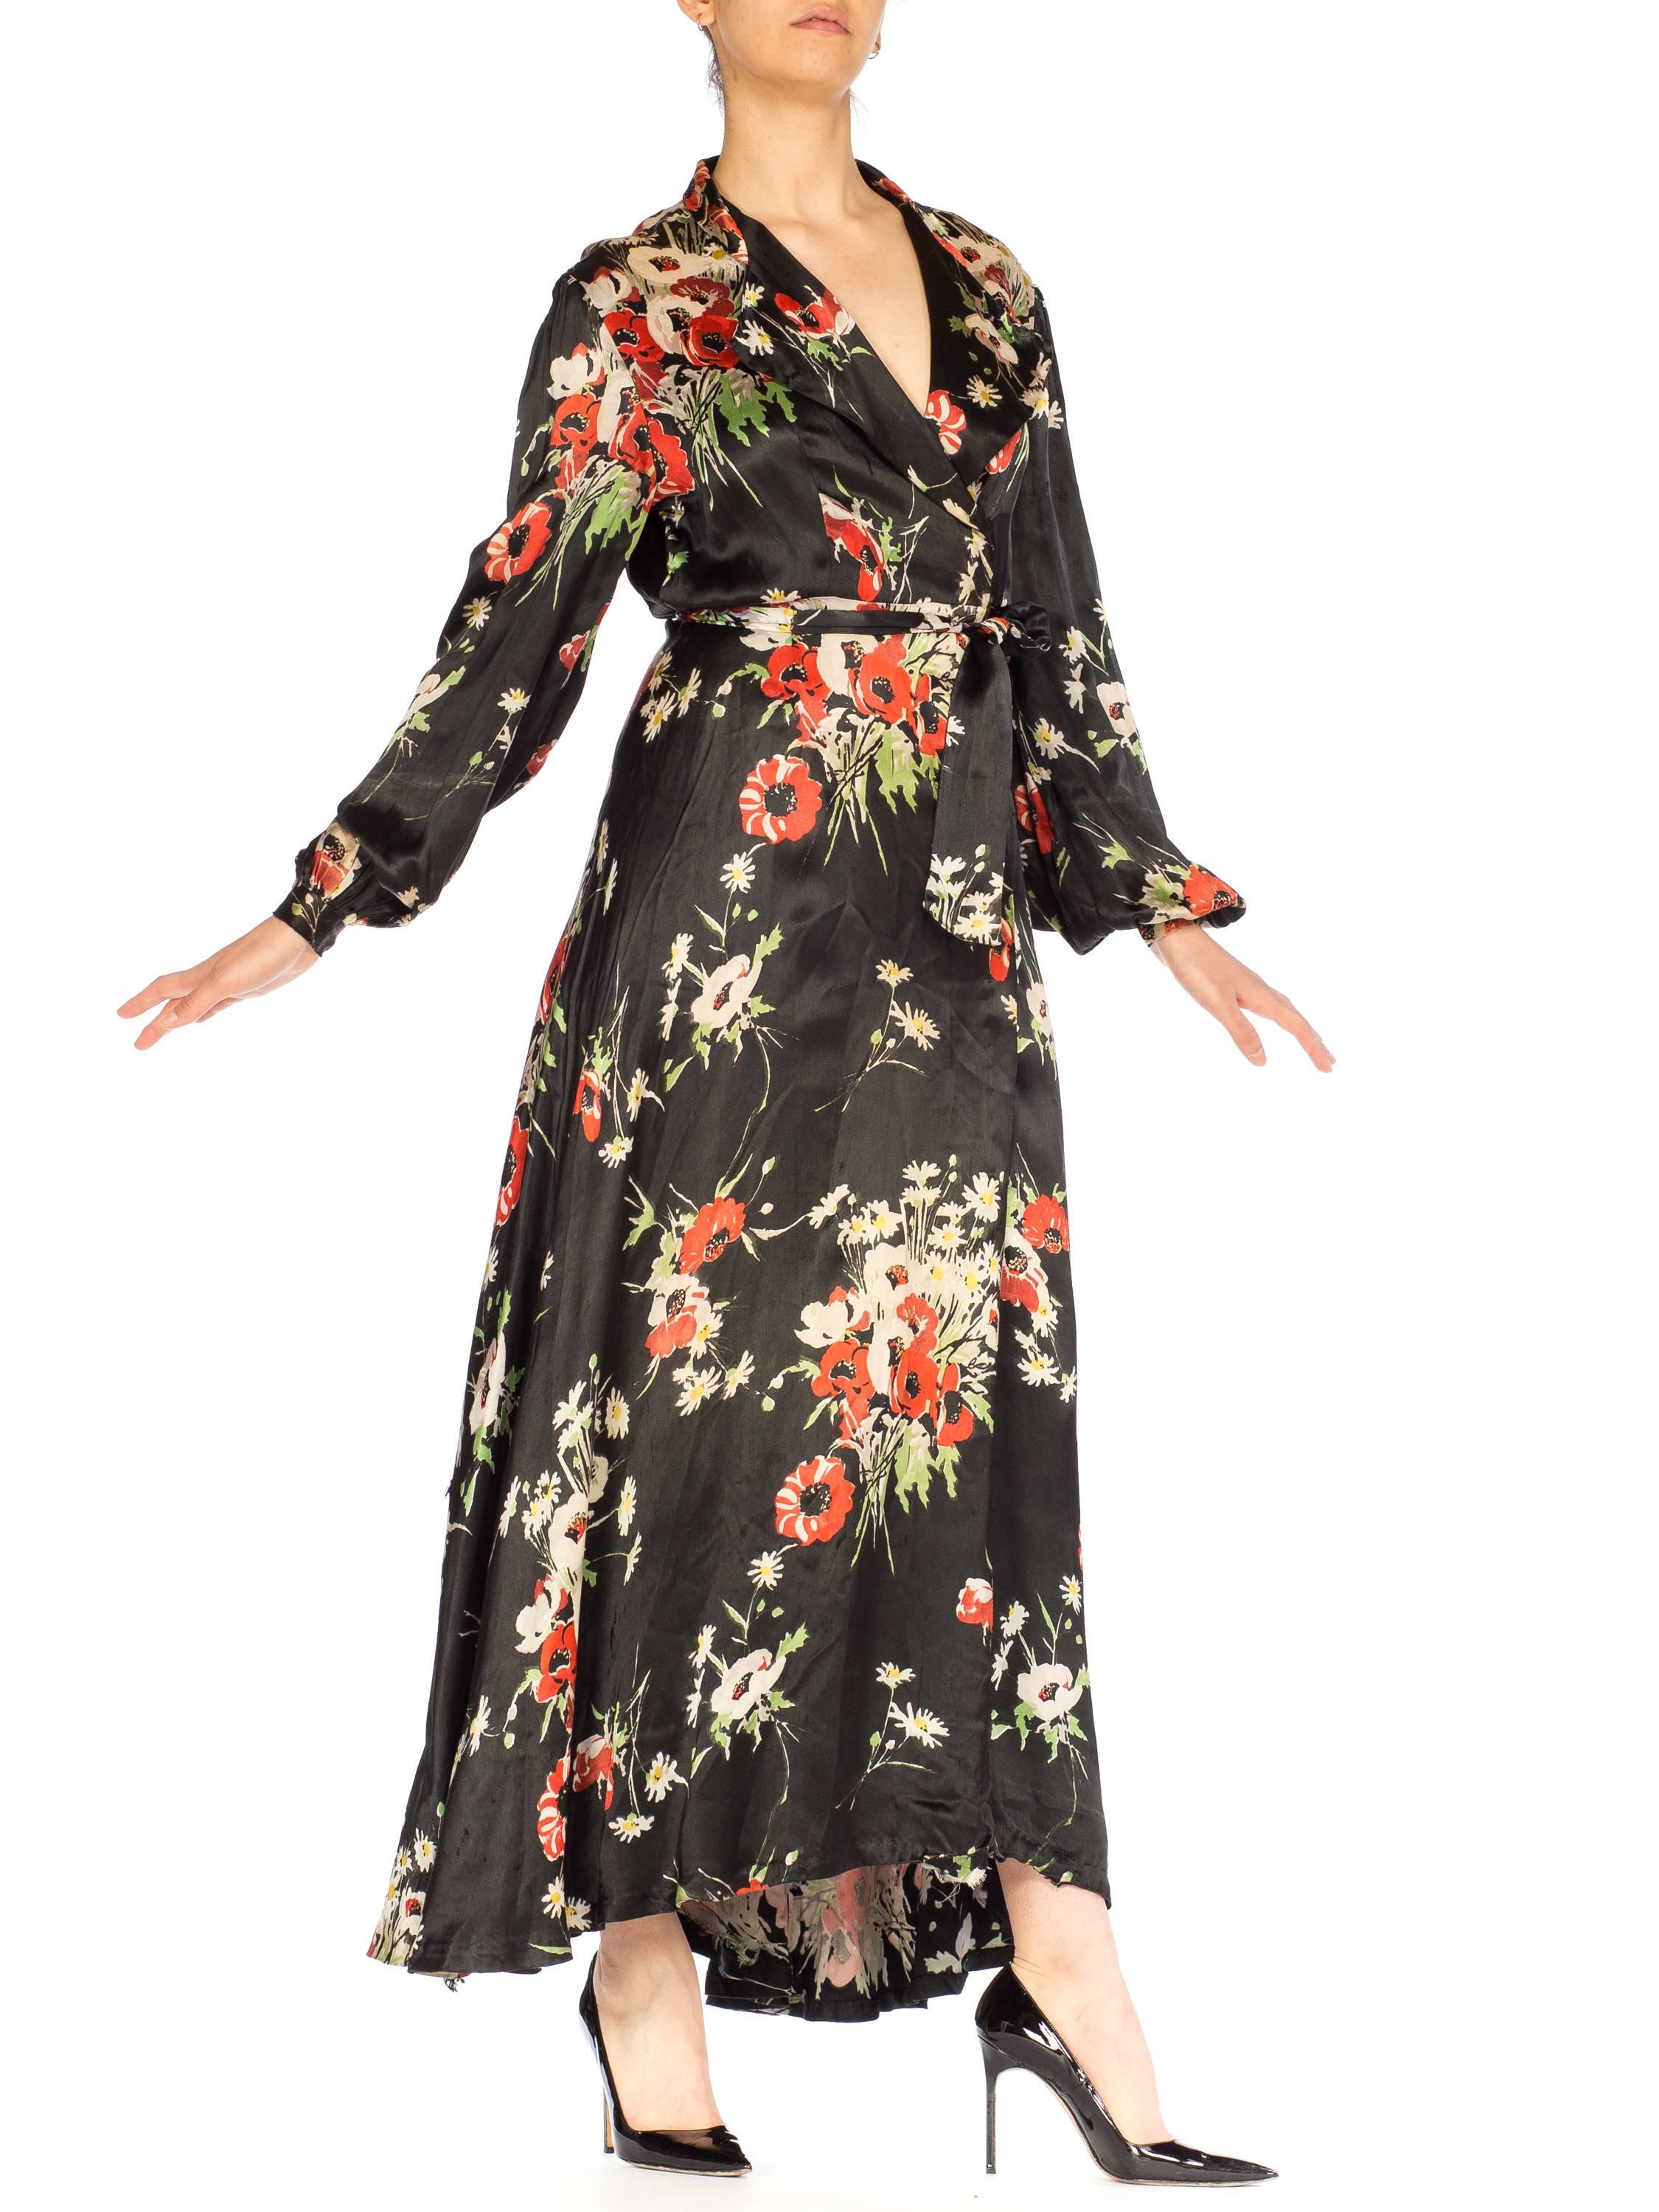 Black Floral Satin Wrap Dress Dressing Gown, 1940s